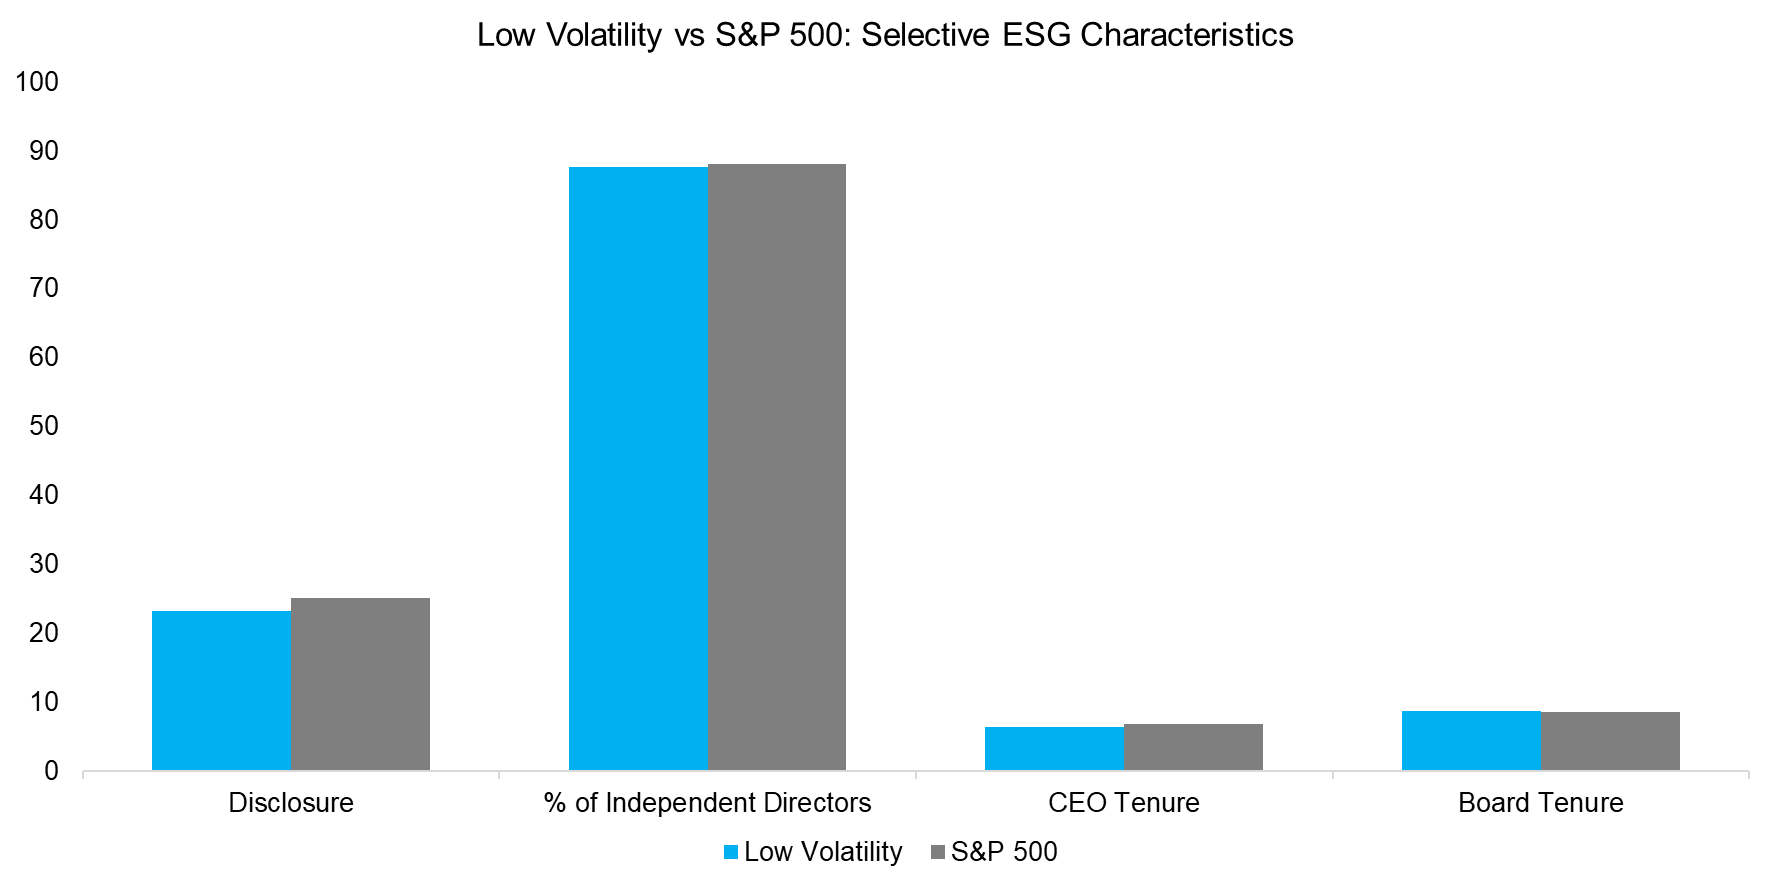 Low Volatility vs S&P 500 Selective ESG Characteristics